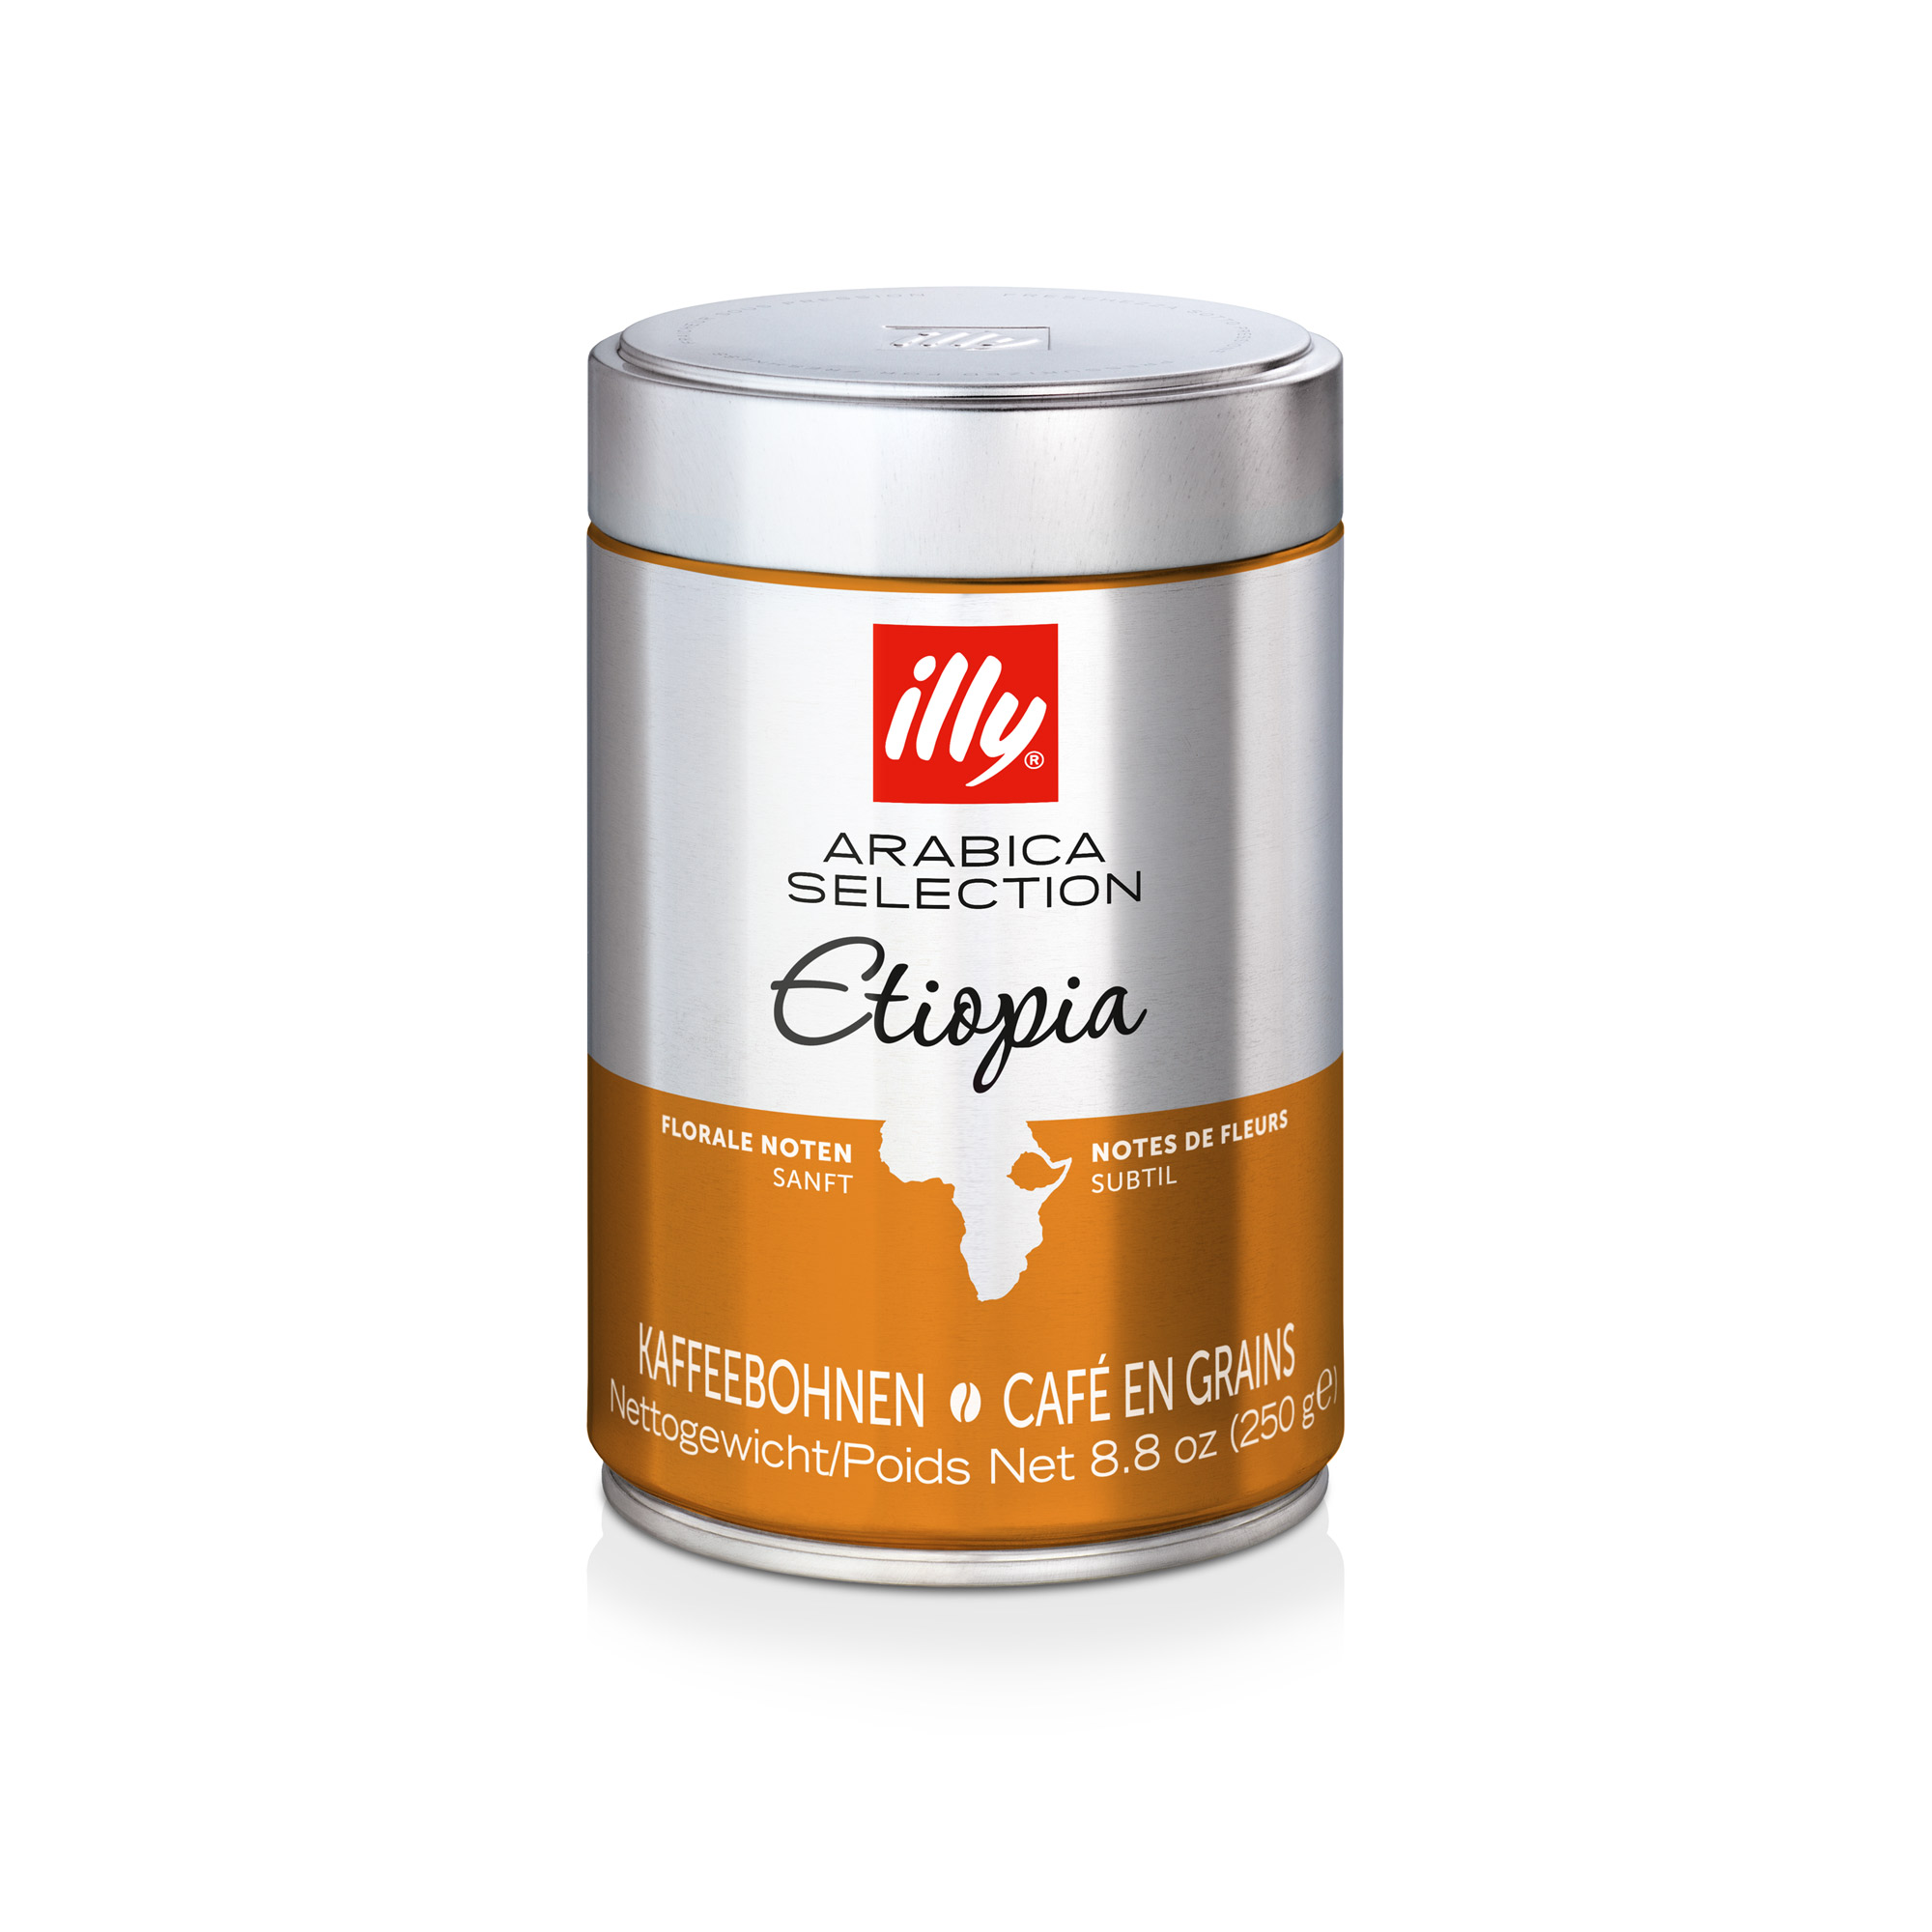 Whole Bean Arabica Selection Ethiopia Coffee